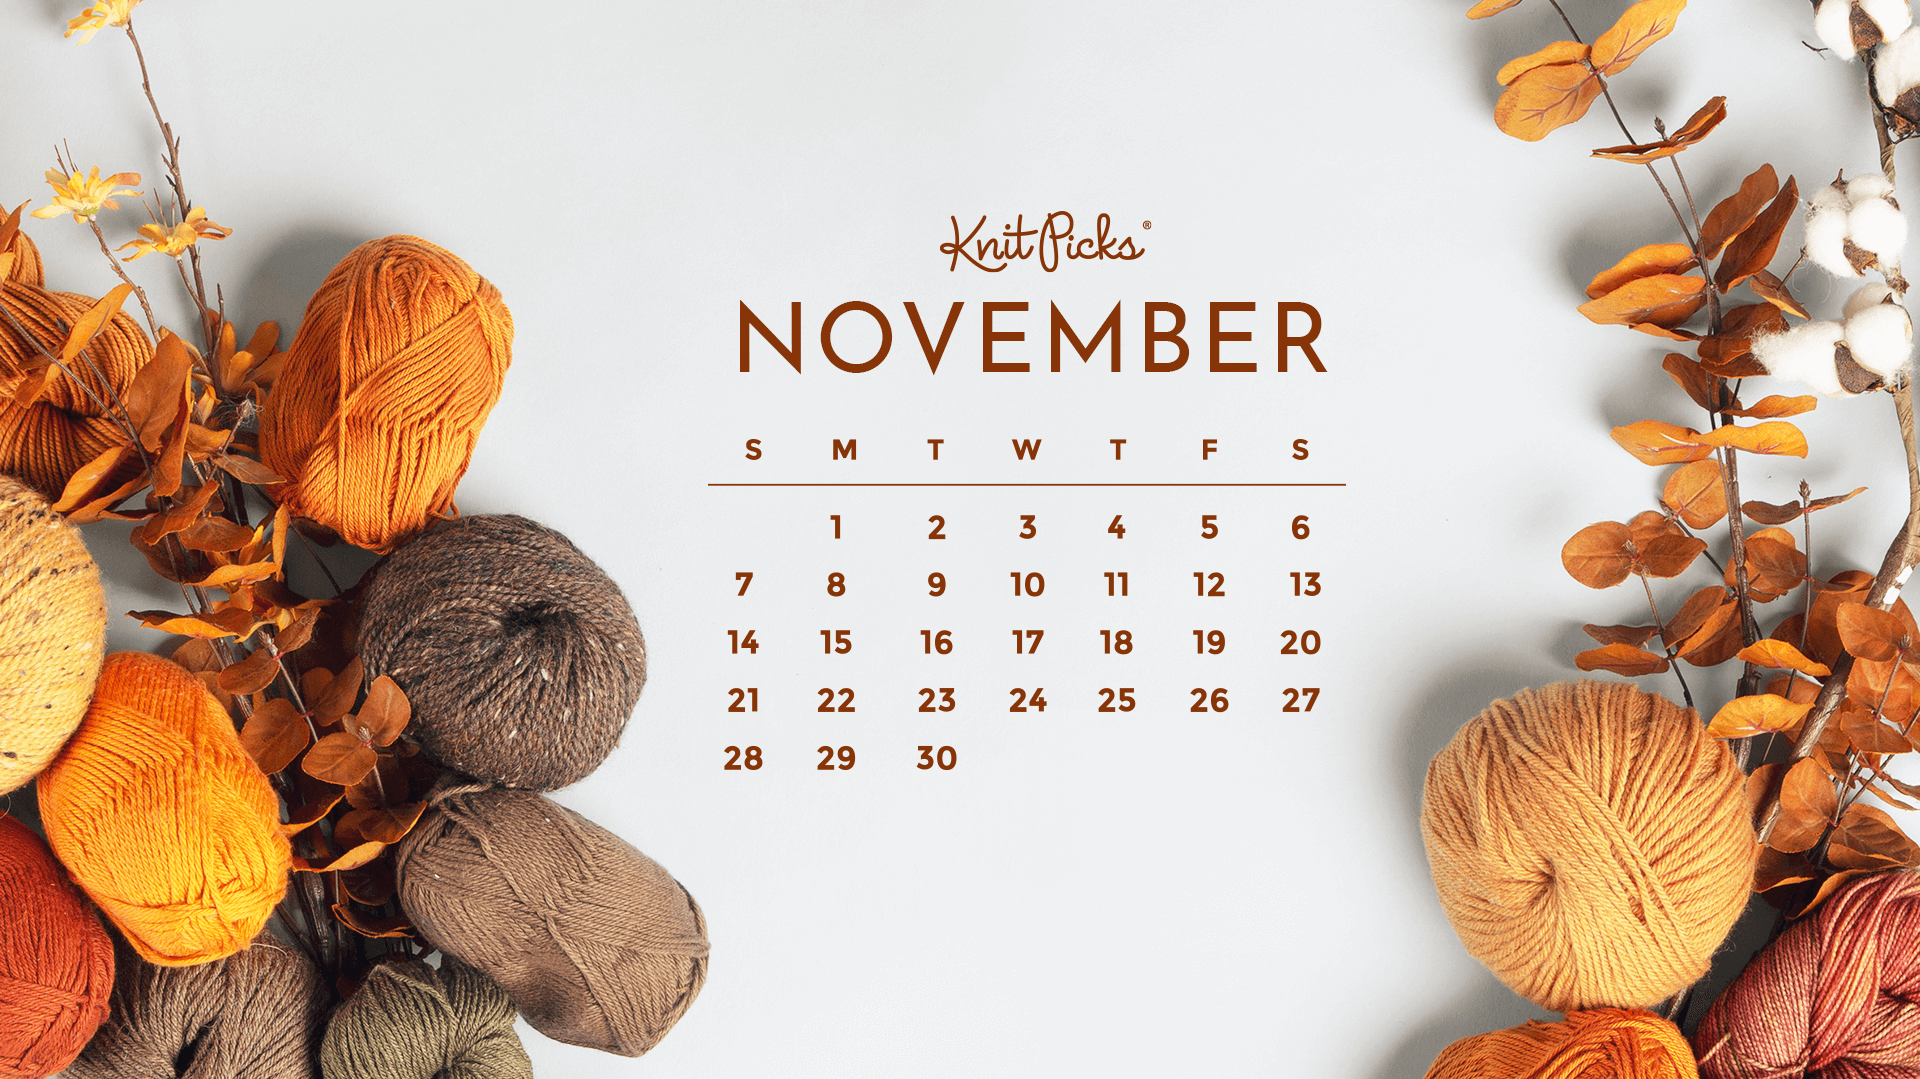 Free Downloadable November 21 Calendar Knitpicks Staff Knitting Blog